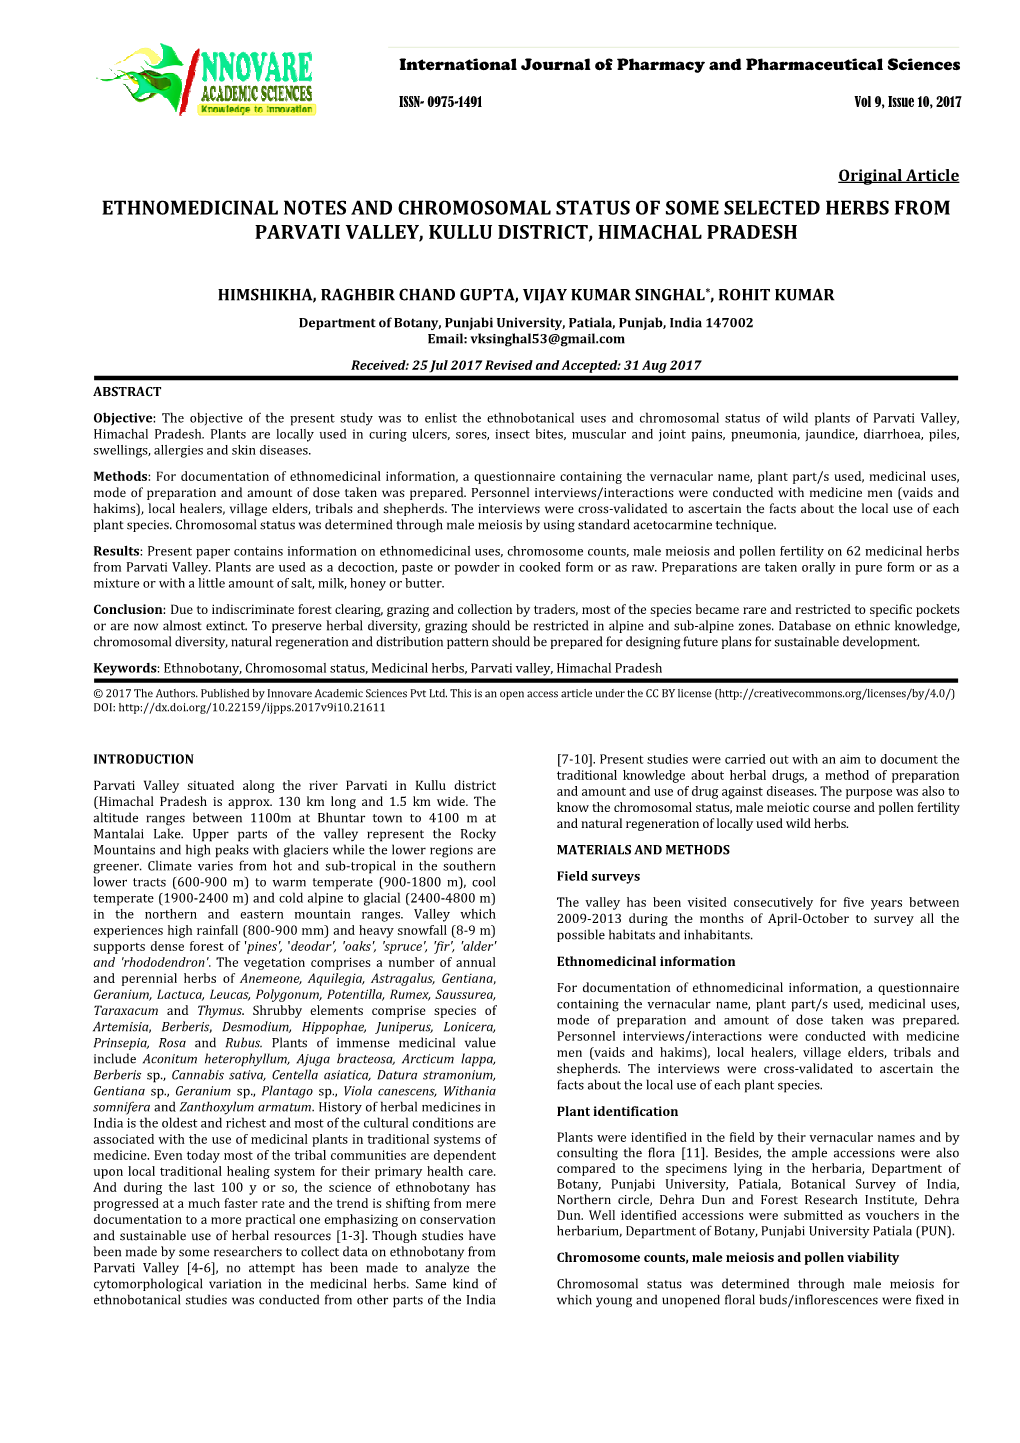 Ethnomedicinal Notes and Chromosomal Status of Some Selected Herbs from Parvati Valley, Kullu District, Himachal Pradesh